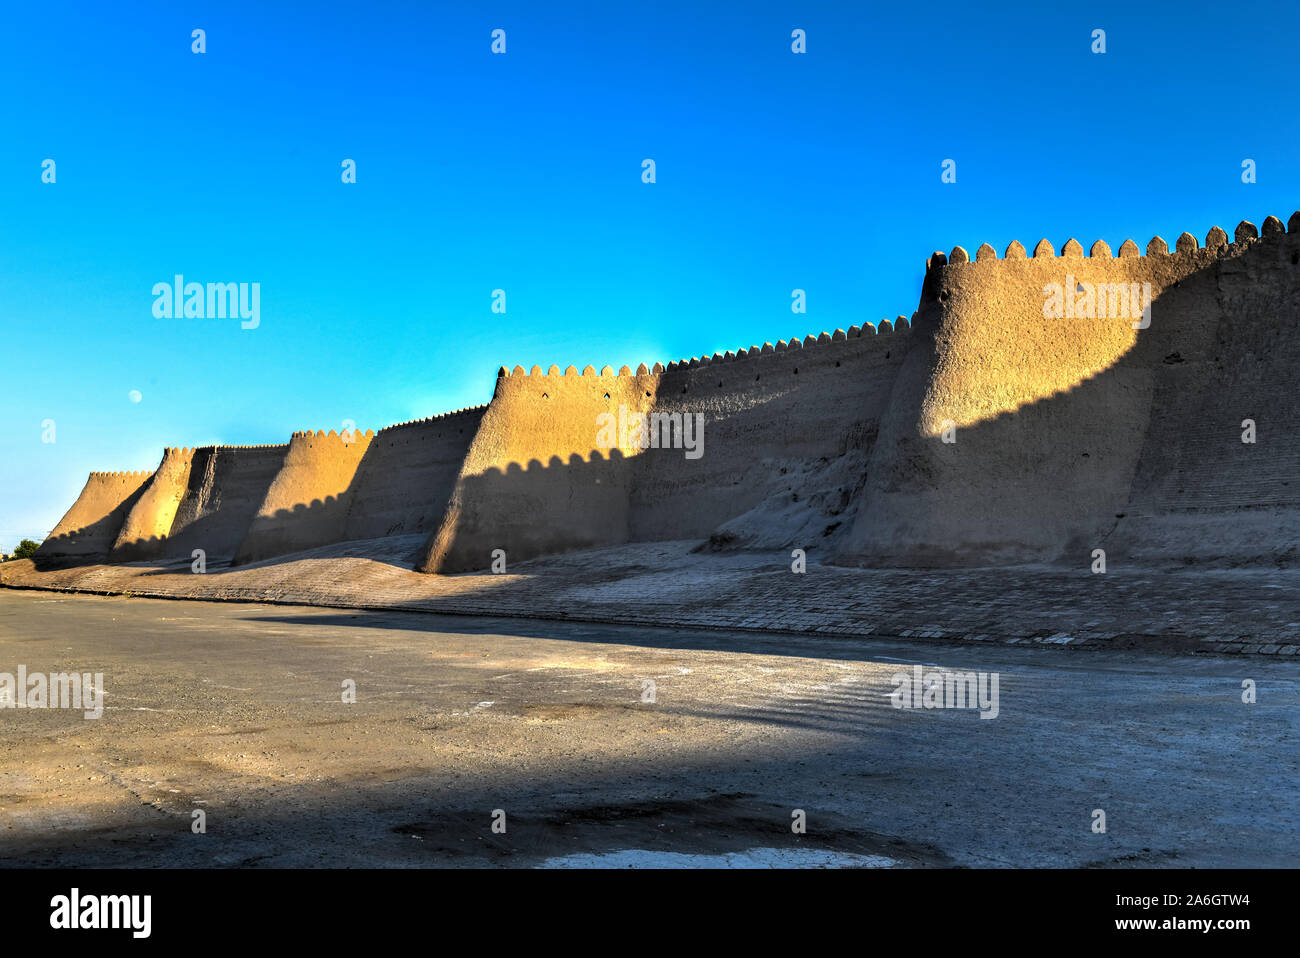 Wall of Itchan Kala (Ichon Qala) - Khiva (Chiva, Heva, Xiva, Chiwa, Khiveh) - Xorazm Province - Uzbekistan - Town on the silk road in Central Asia. Stock Photo